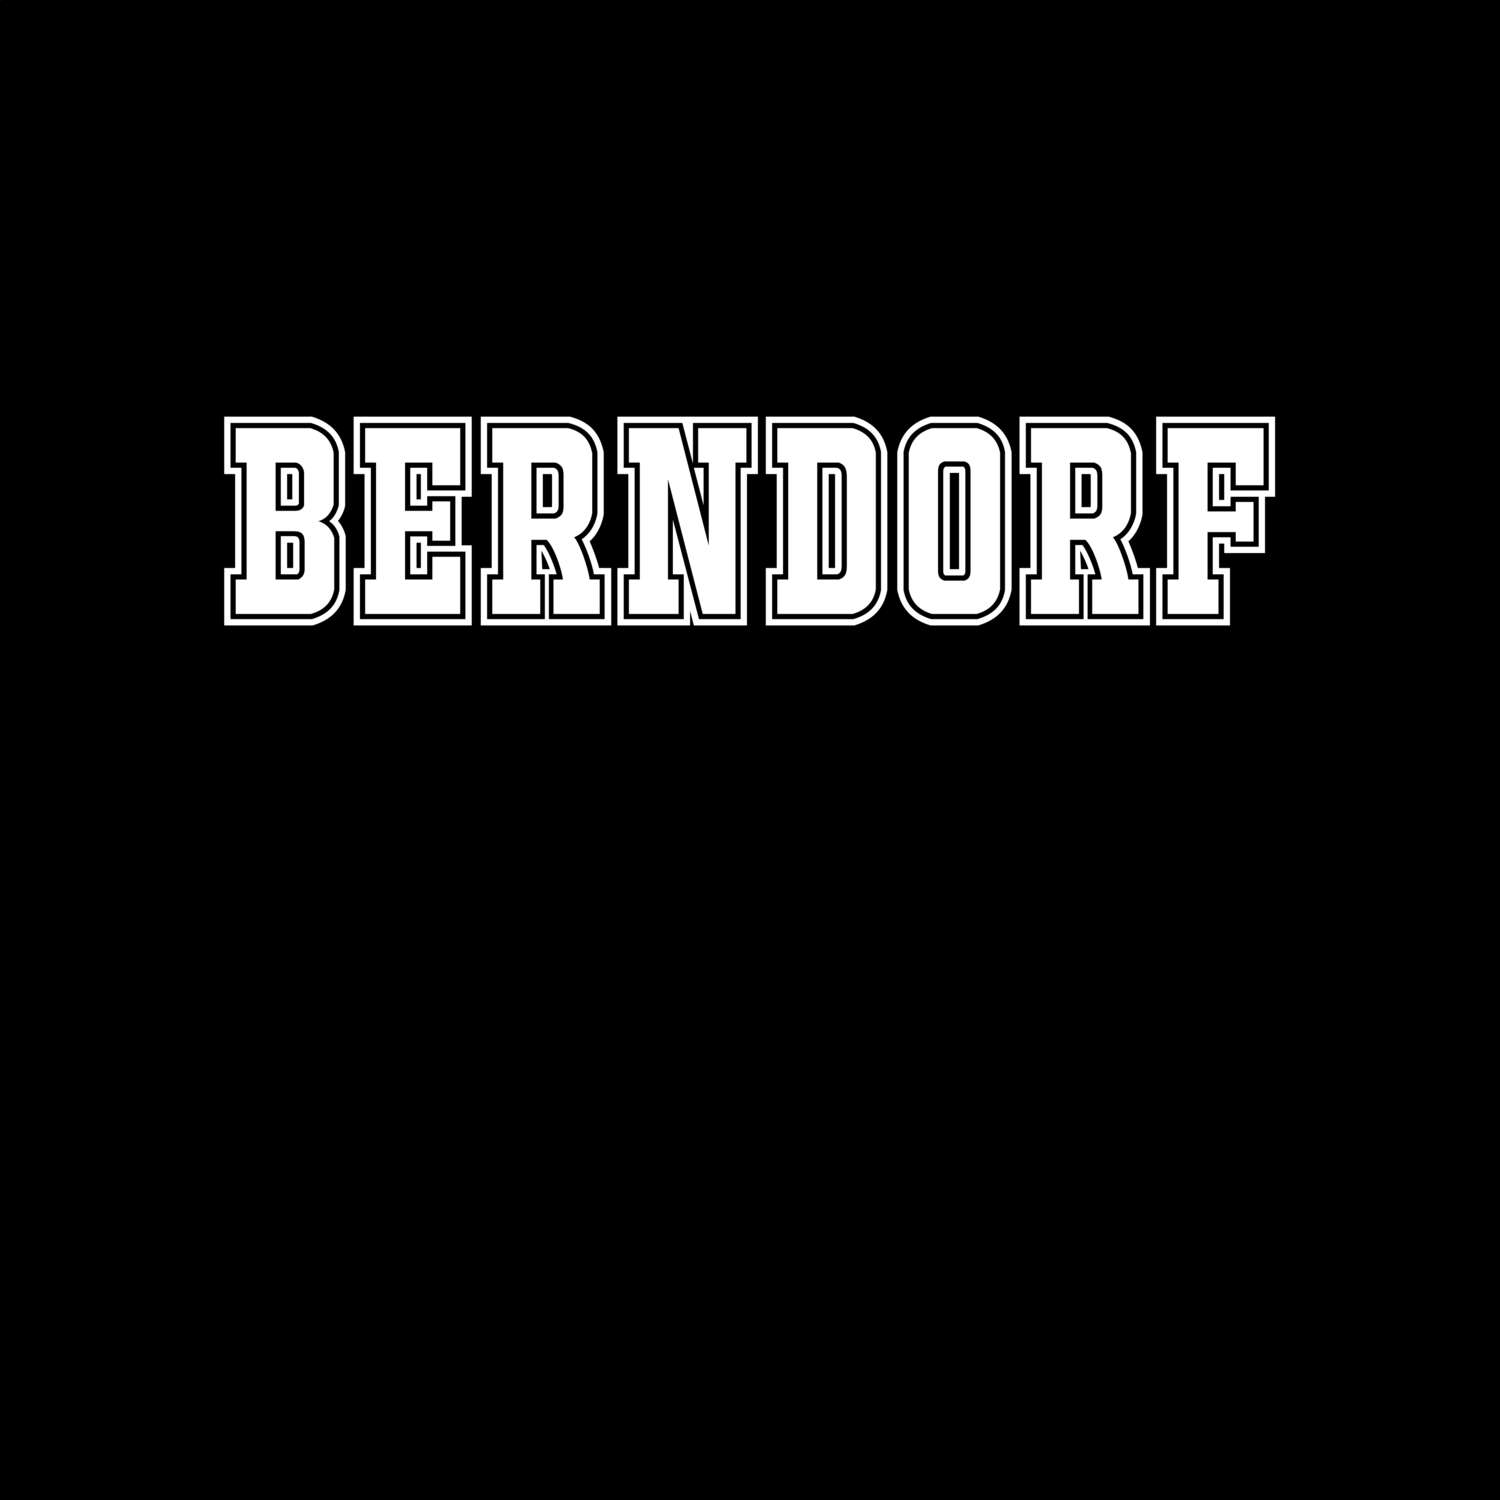 Berndorf T-Shirt »Classic«